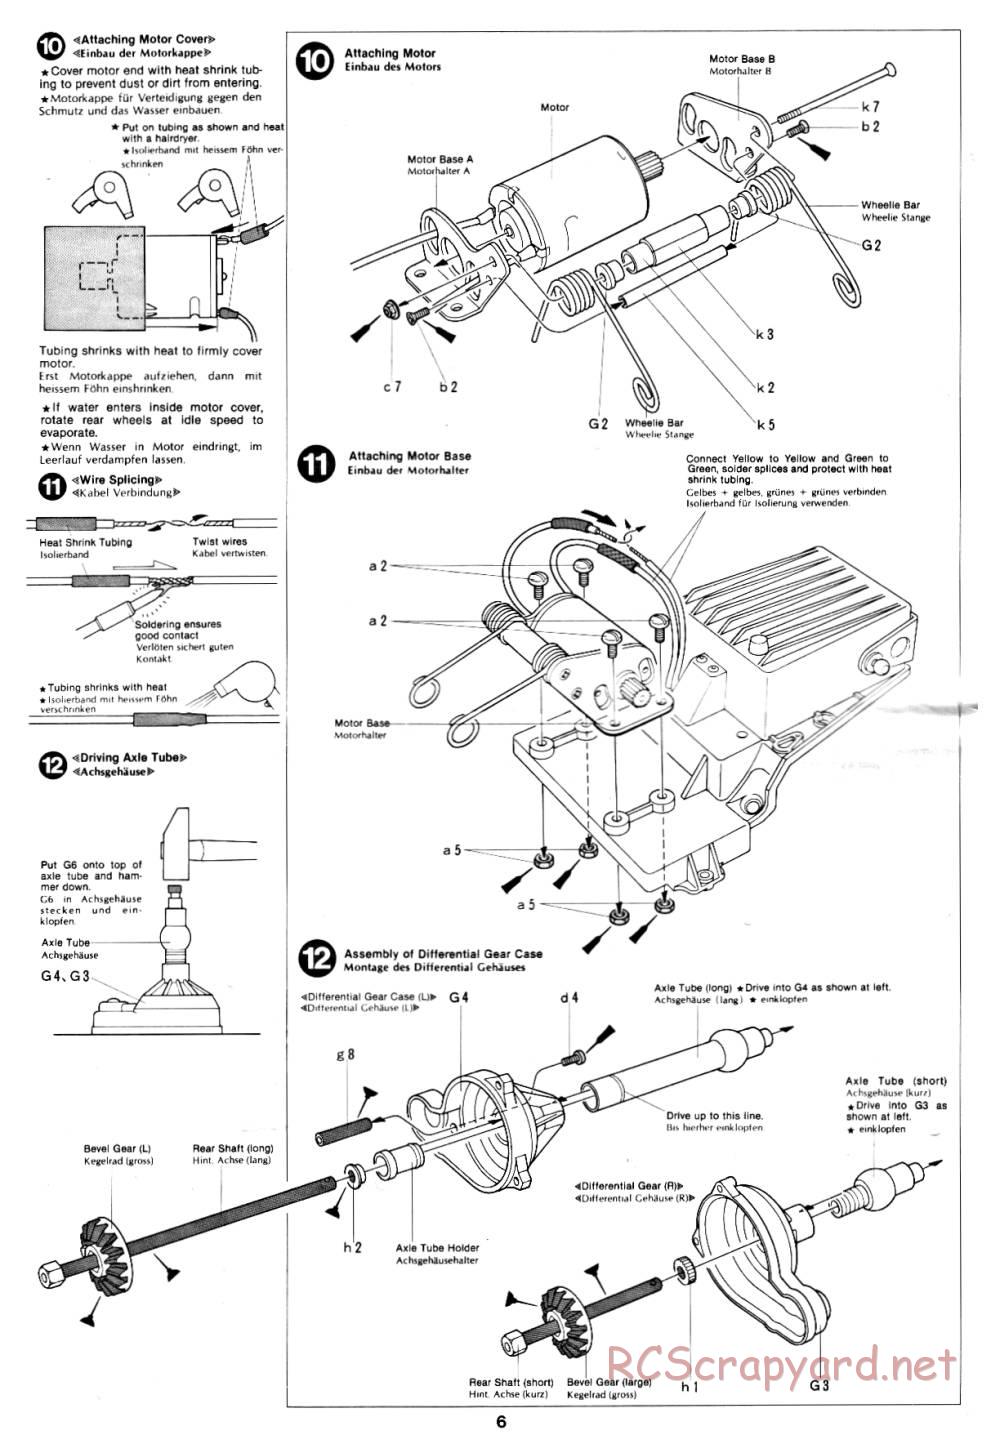 Tamiya - Wild Willy, Willys M38 - 58035 - Manual - Page 6